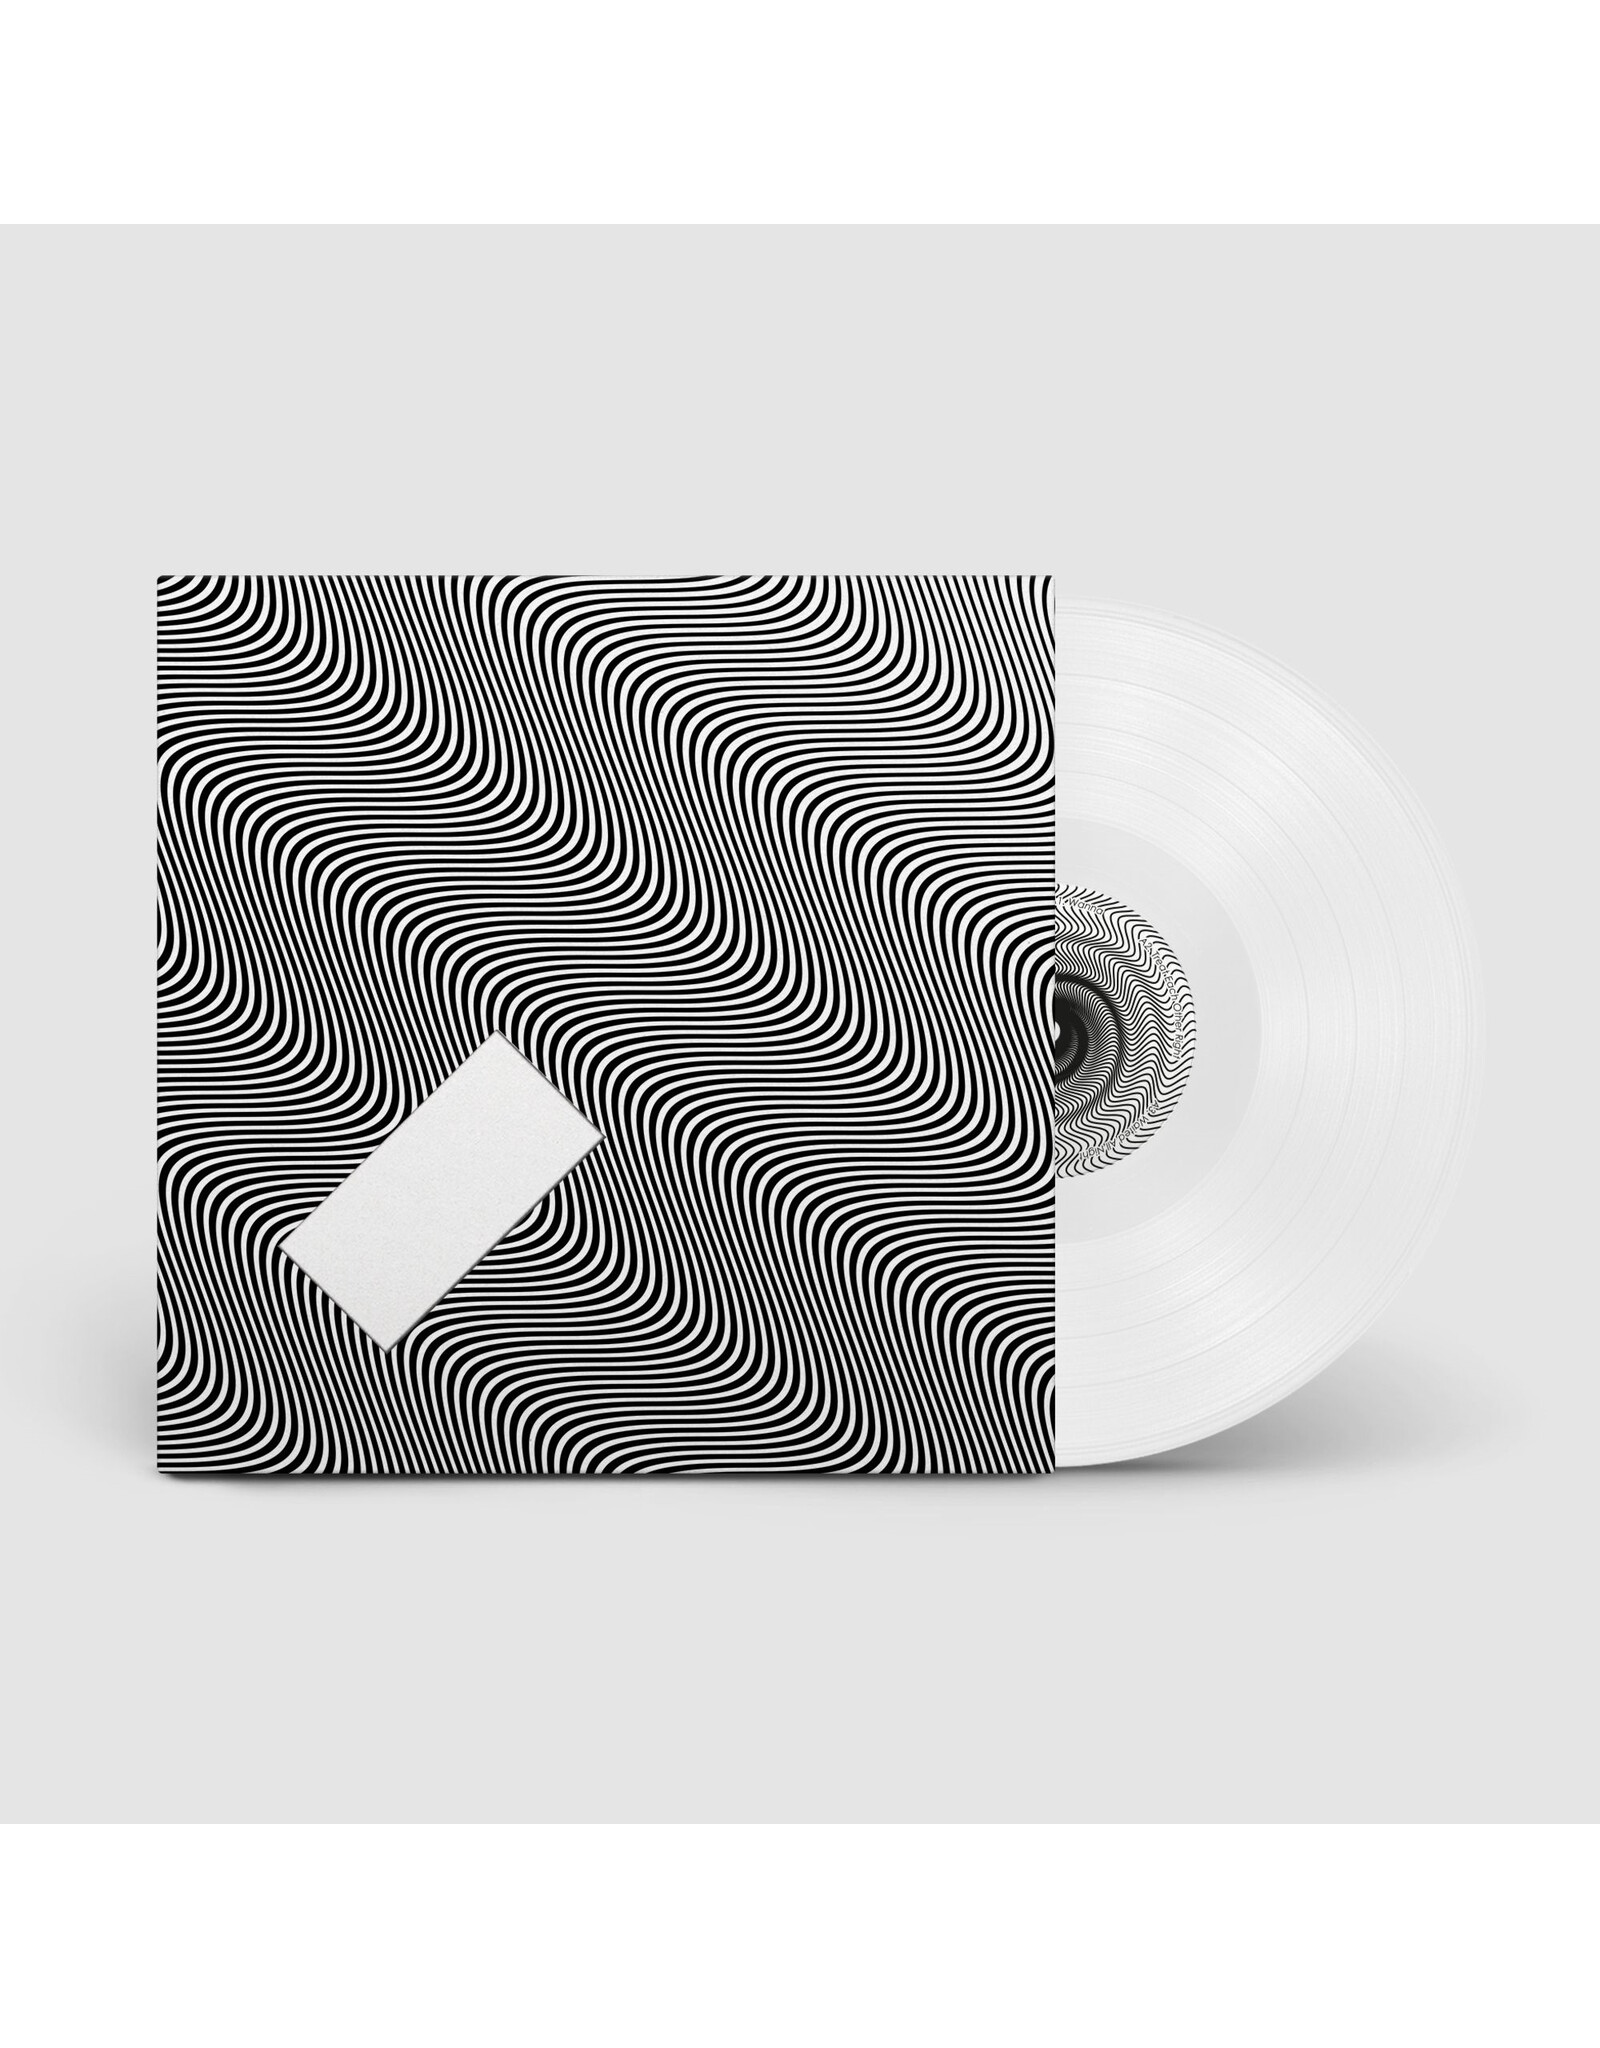 Jamie xx - In Waves (Exclusive White Vinyl)